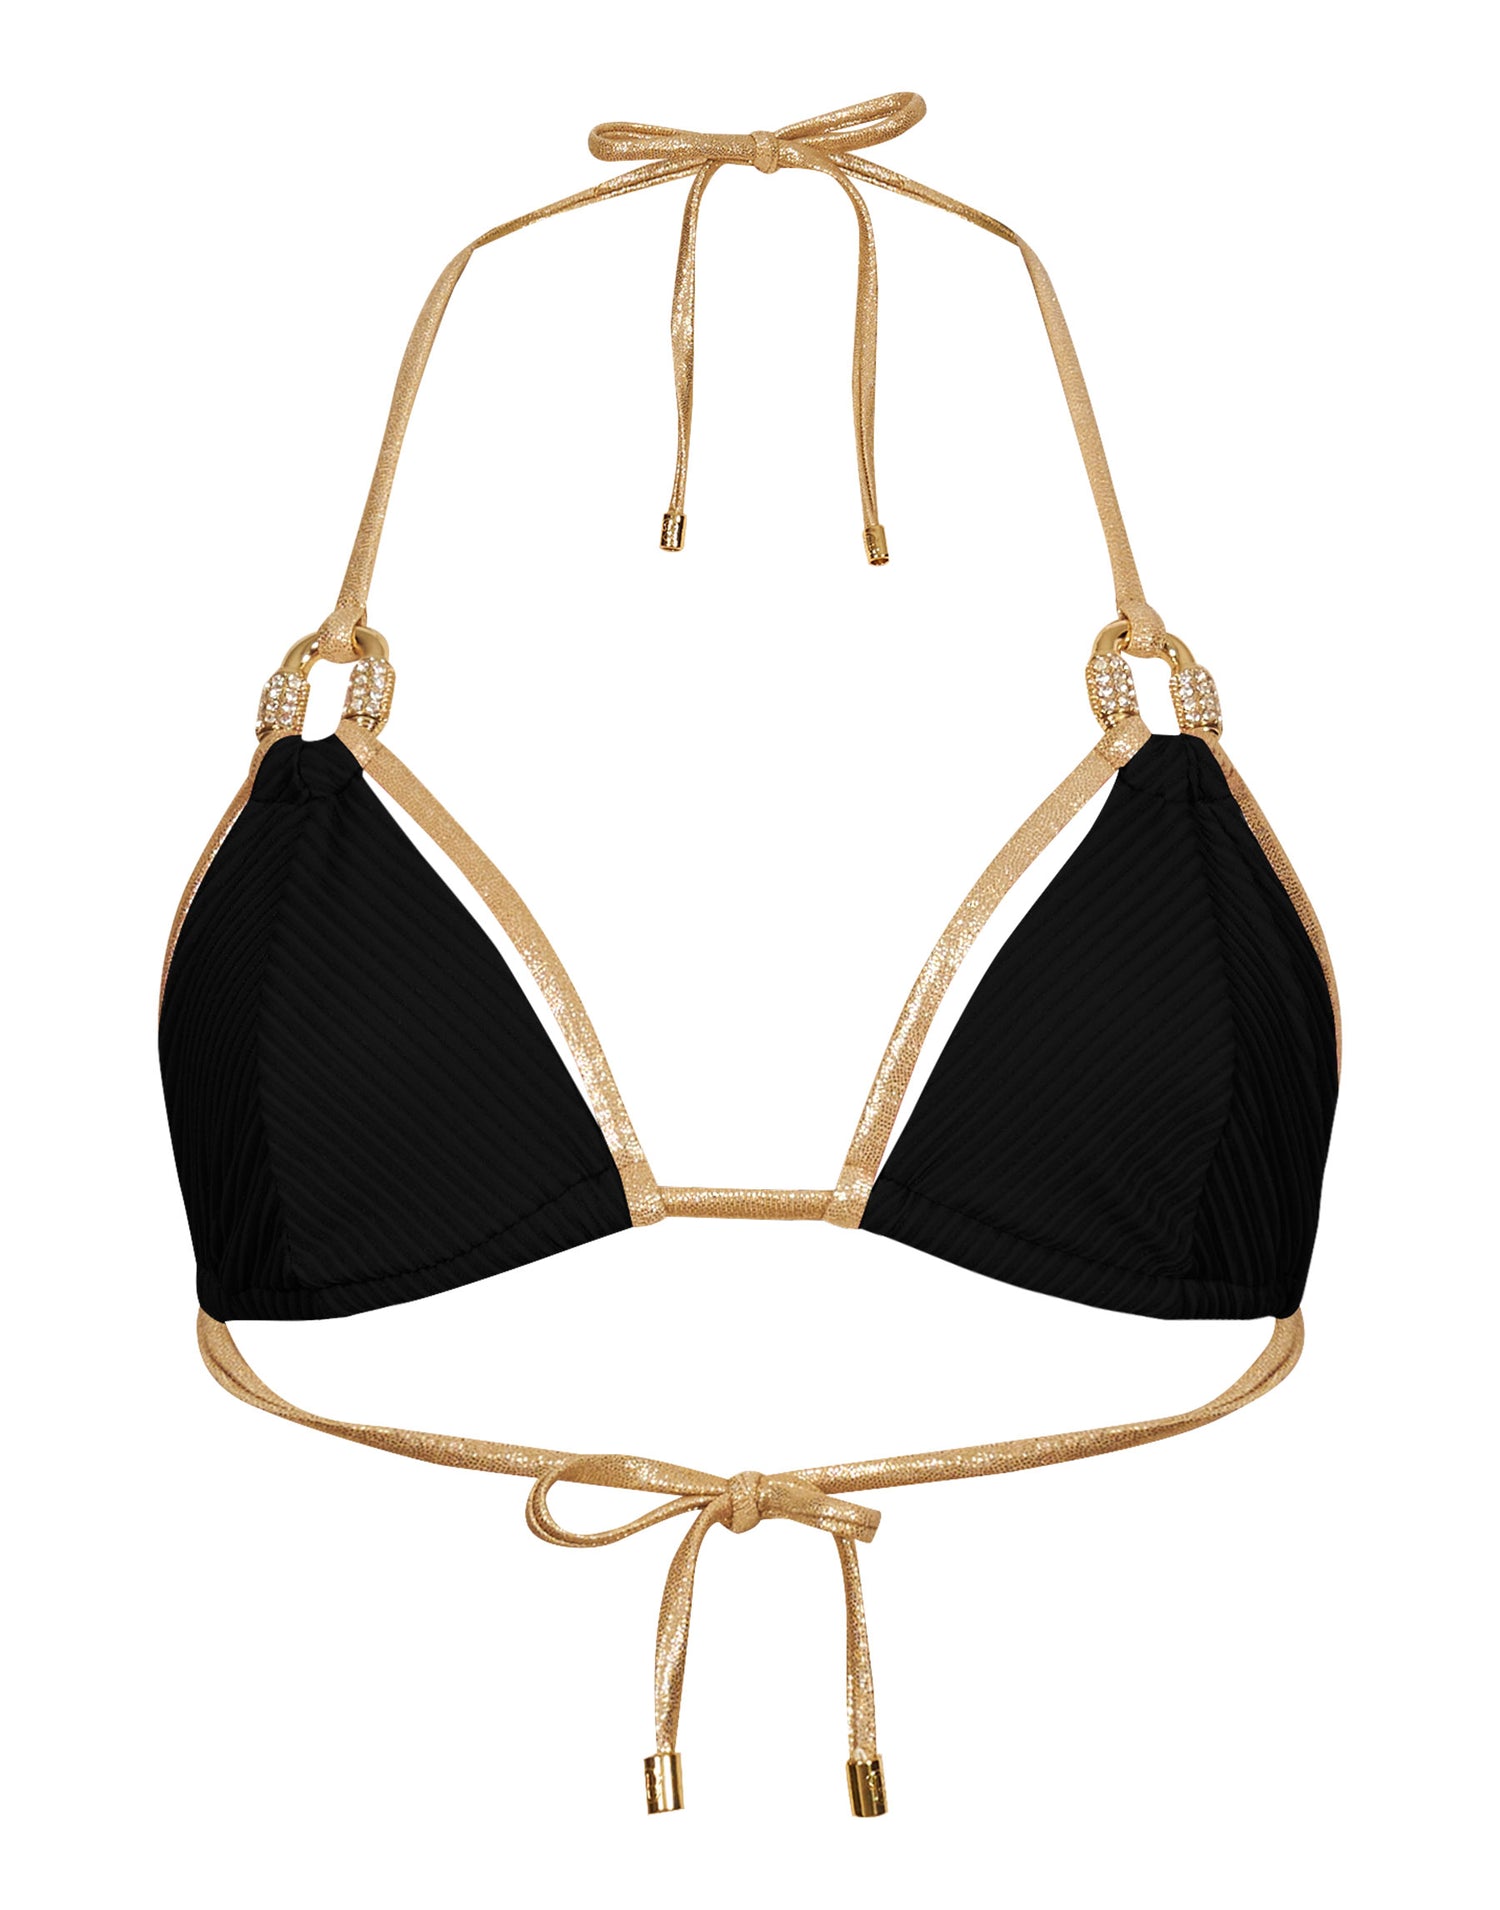 Madagascar Glam Triangle Bikini Top in Black with Gold Rhinestone Embellished Hardware - Product Flatlay View  